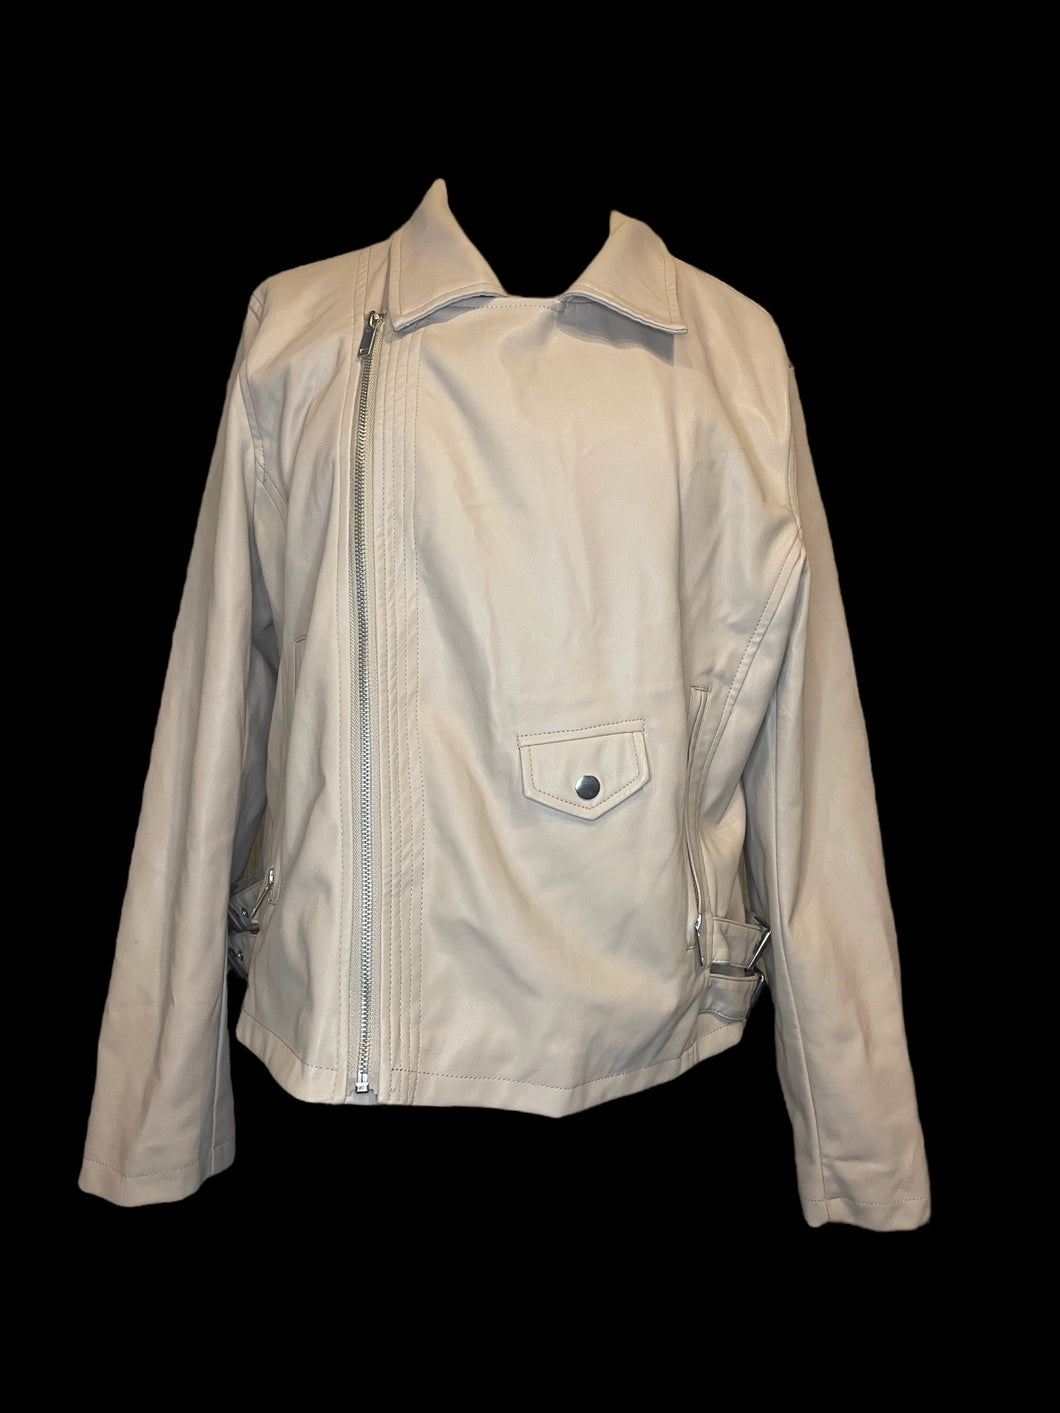 L Beige pleather long sleeve zip-up moto-style jacket w/ folded collar, pockets, & buckle details